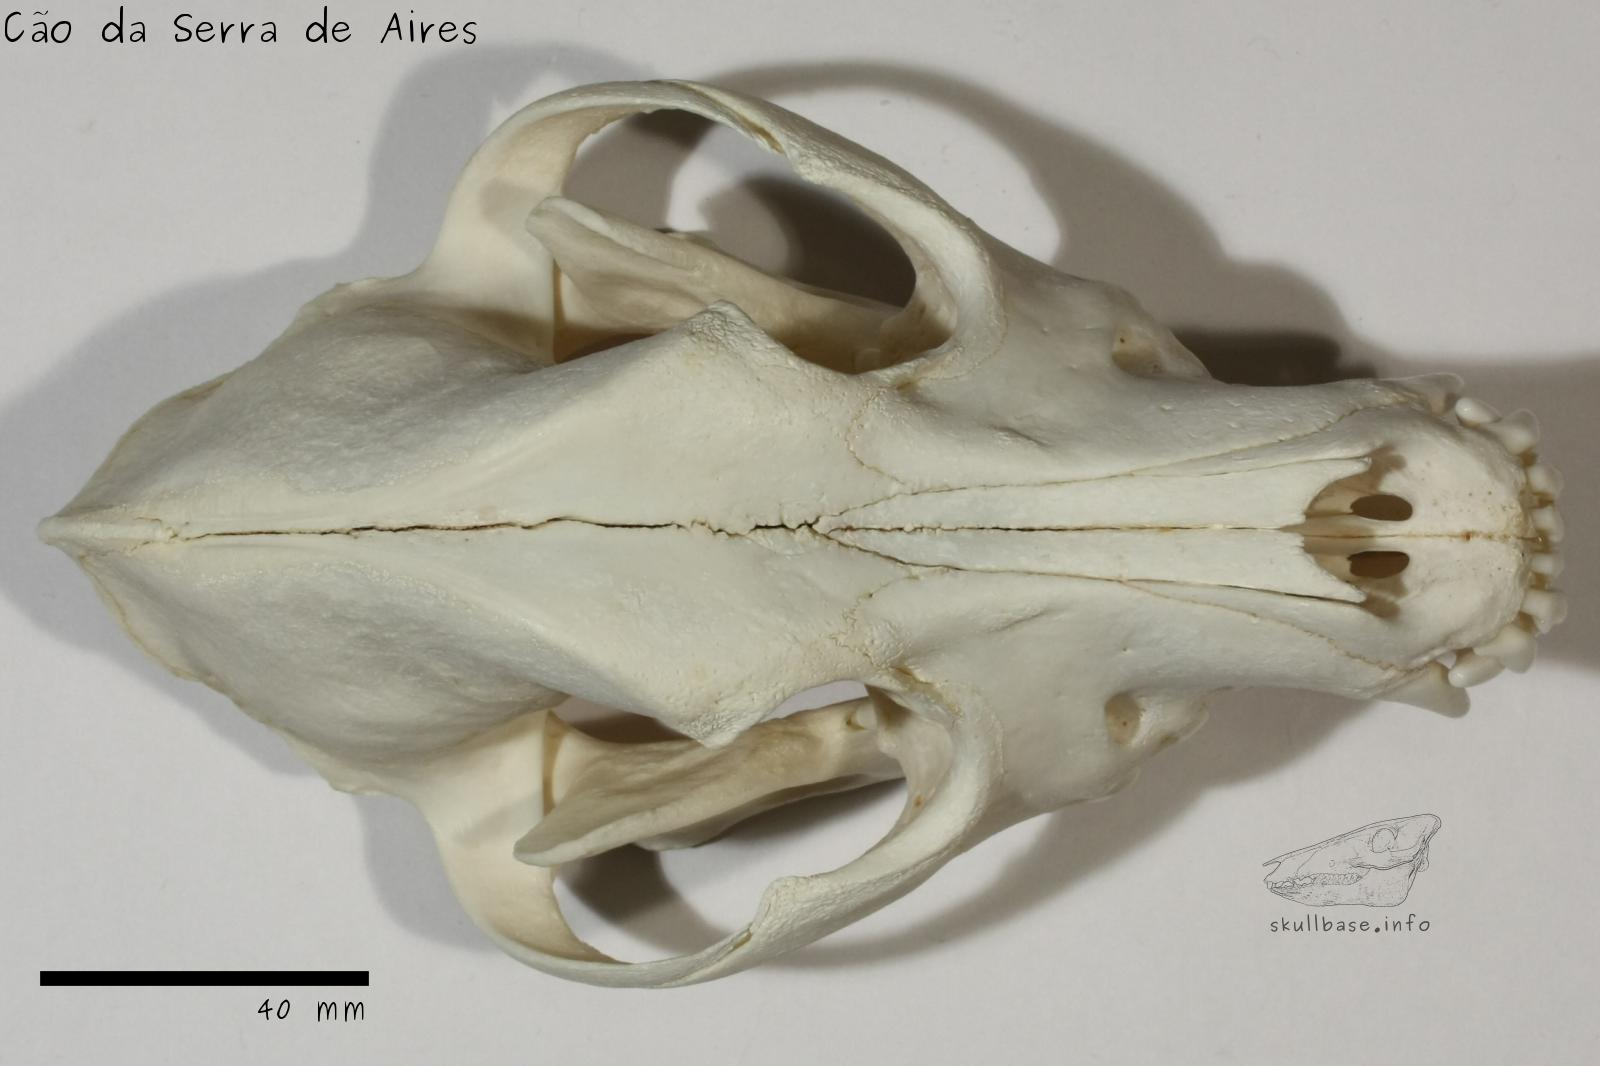 Cão da Serra de Aires (Canis lupus familiaris) skull dorsal view